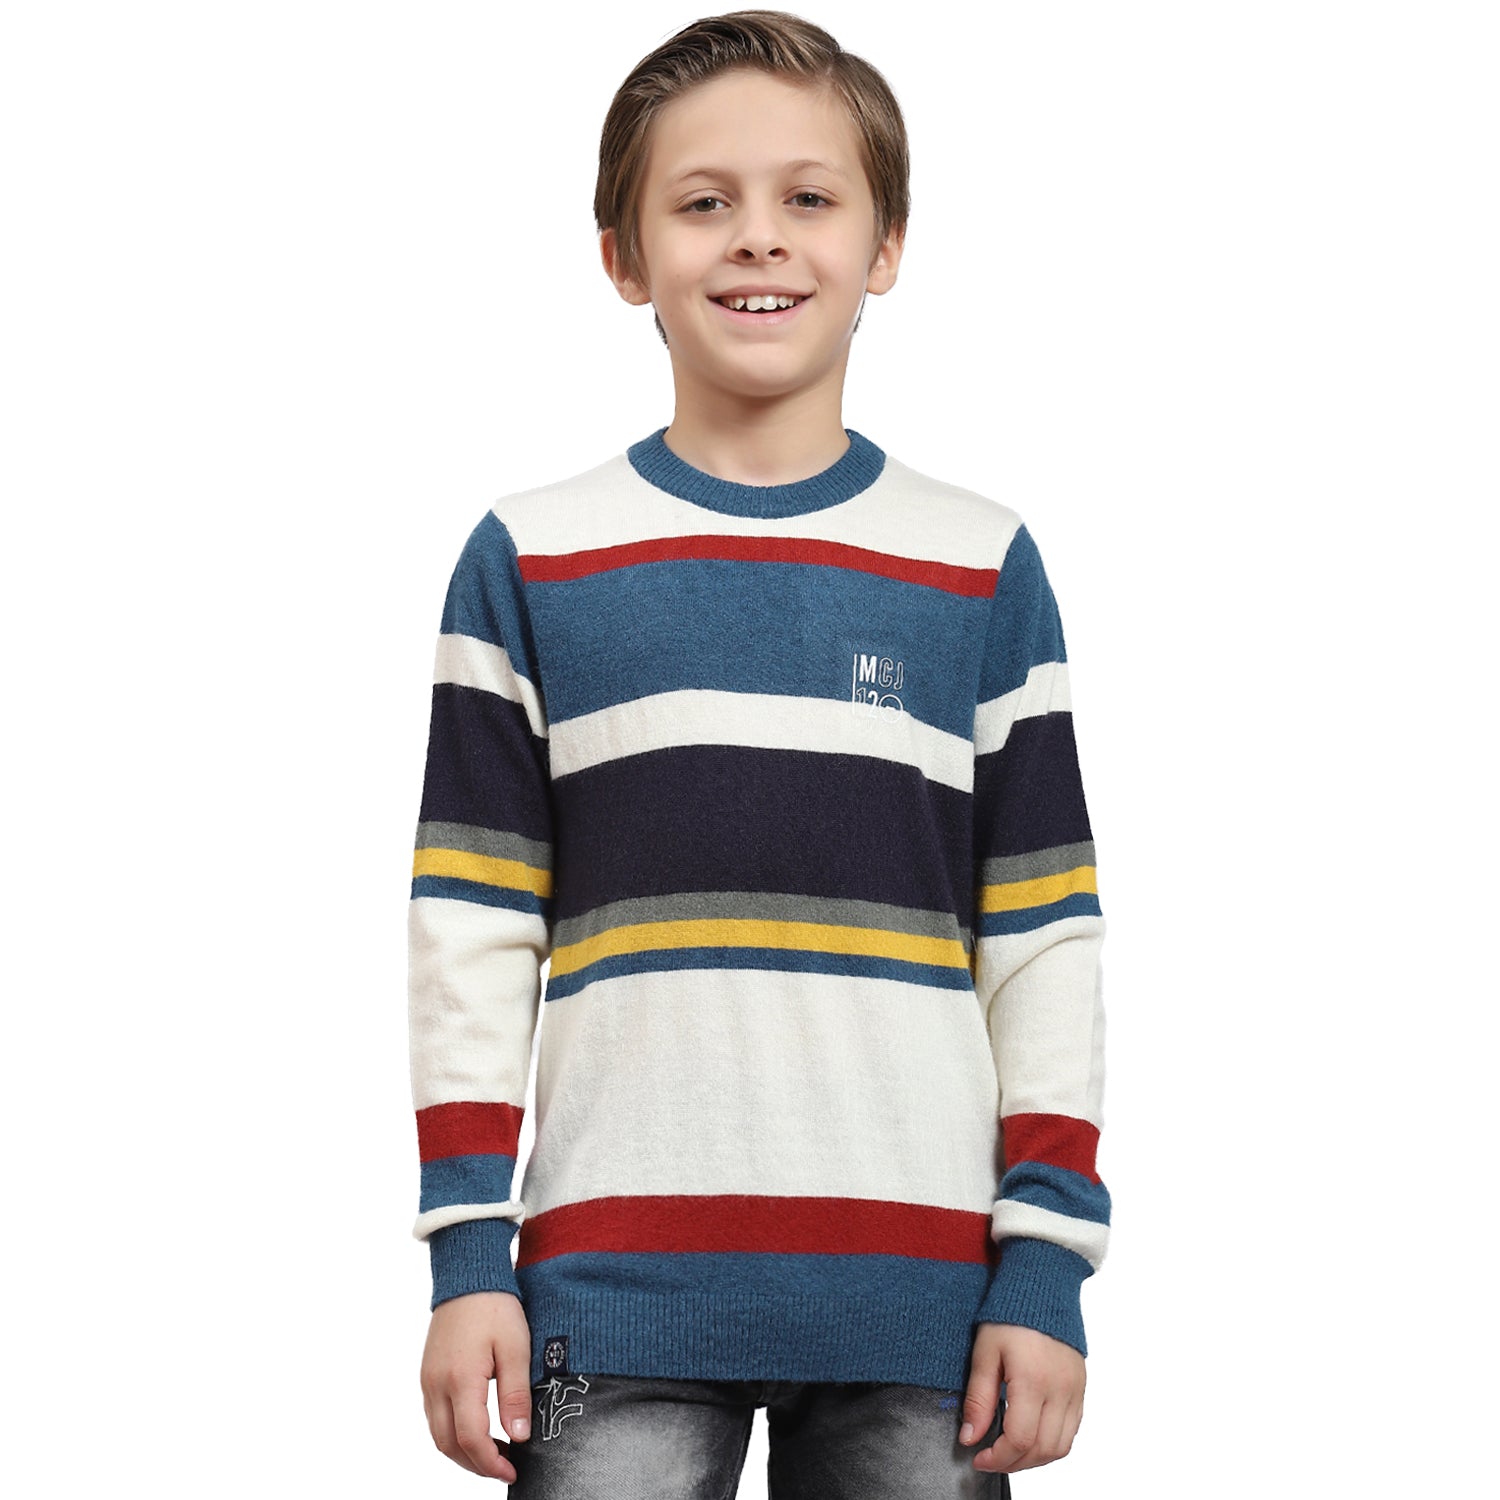 Boys Teal Blue Stripe Round Neck Full Sleeve Sweater